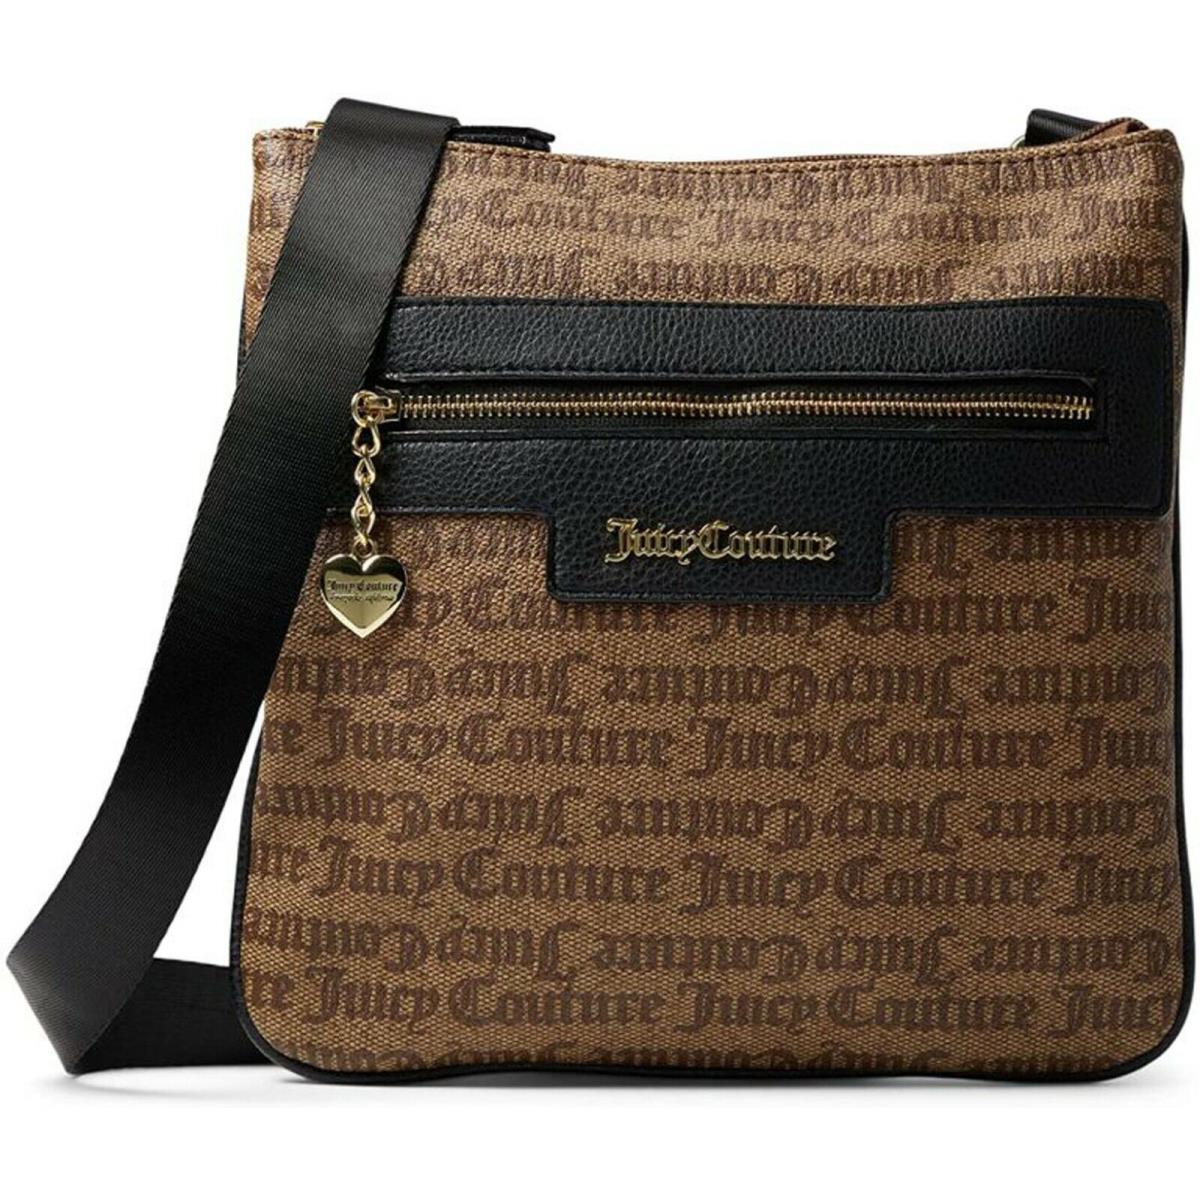 Juicy Couture Quilty Pleasures Handbag - SZ M - Exterior: